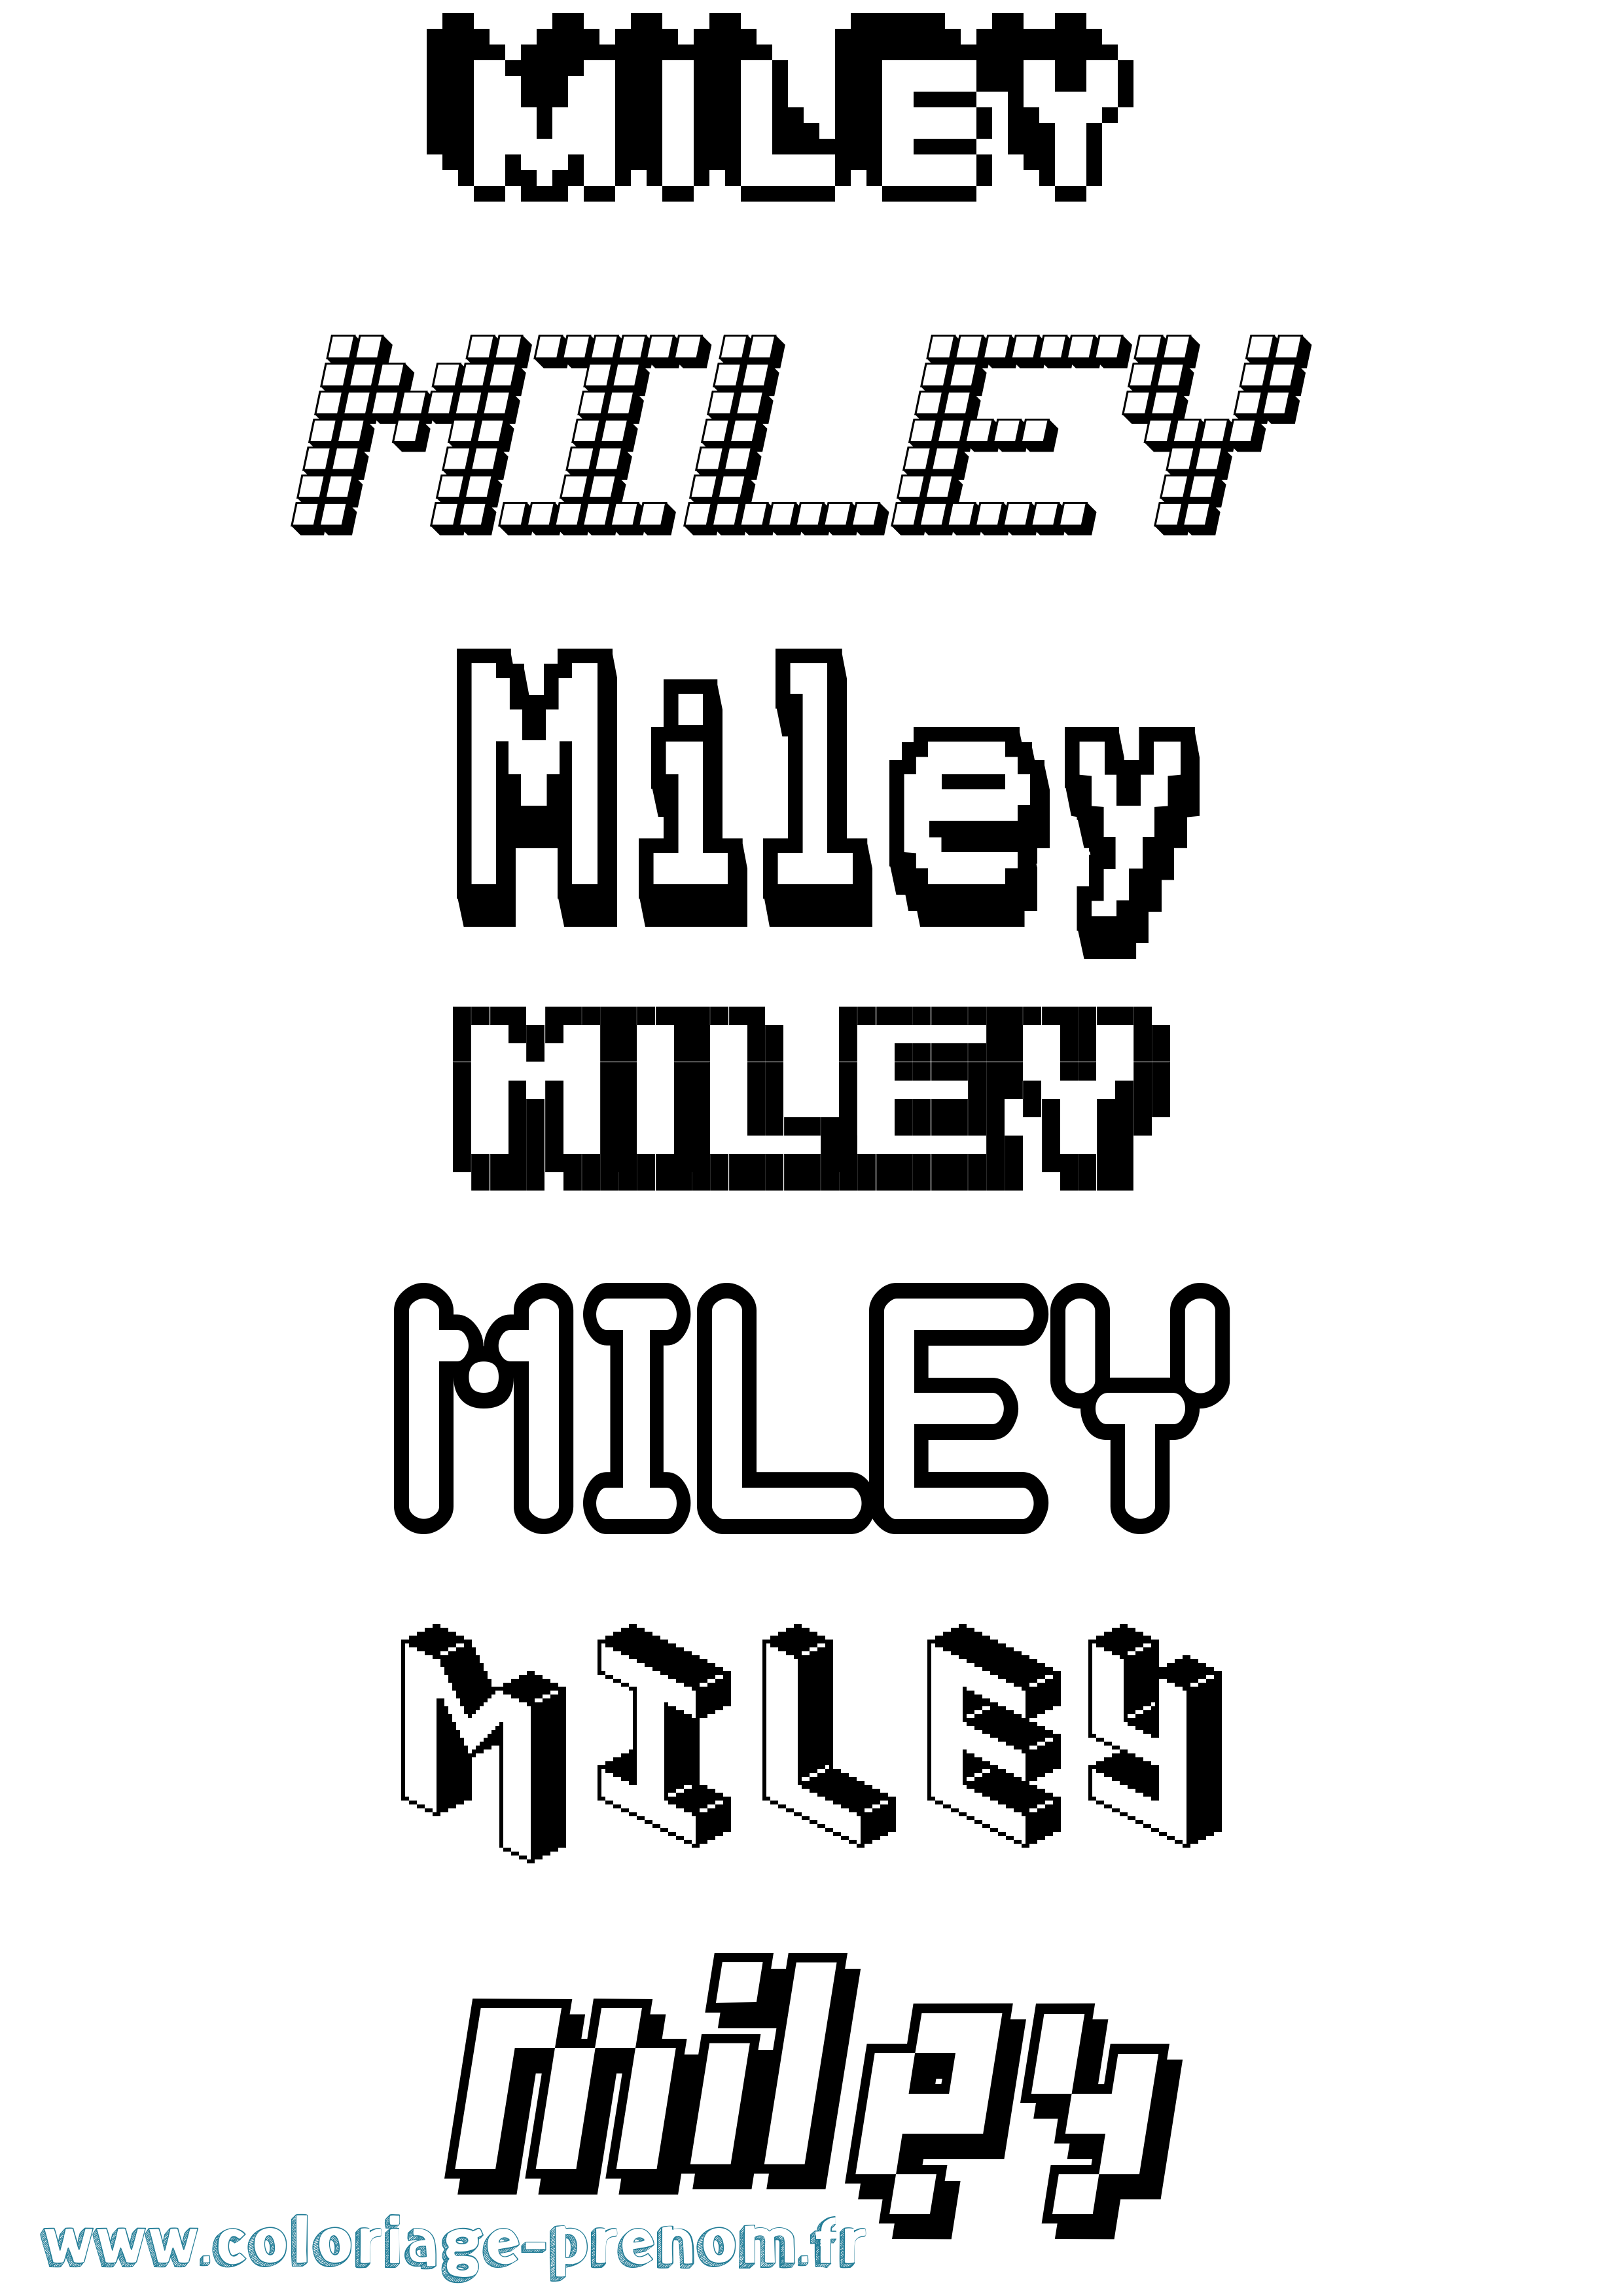 Coloriage prénom Miley Pixel